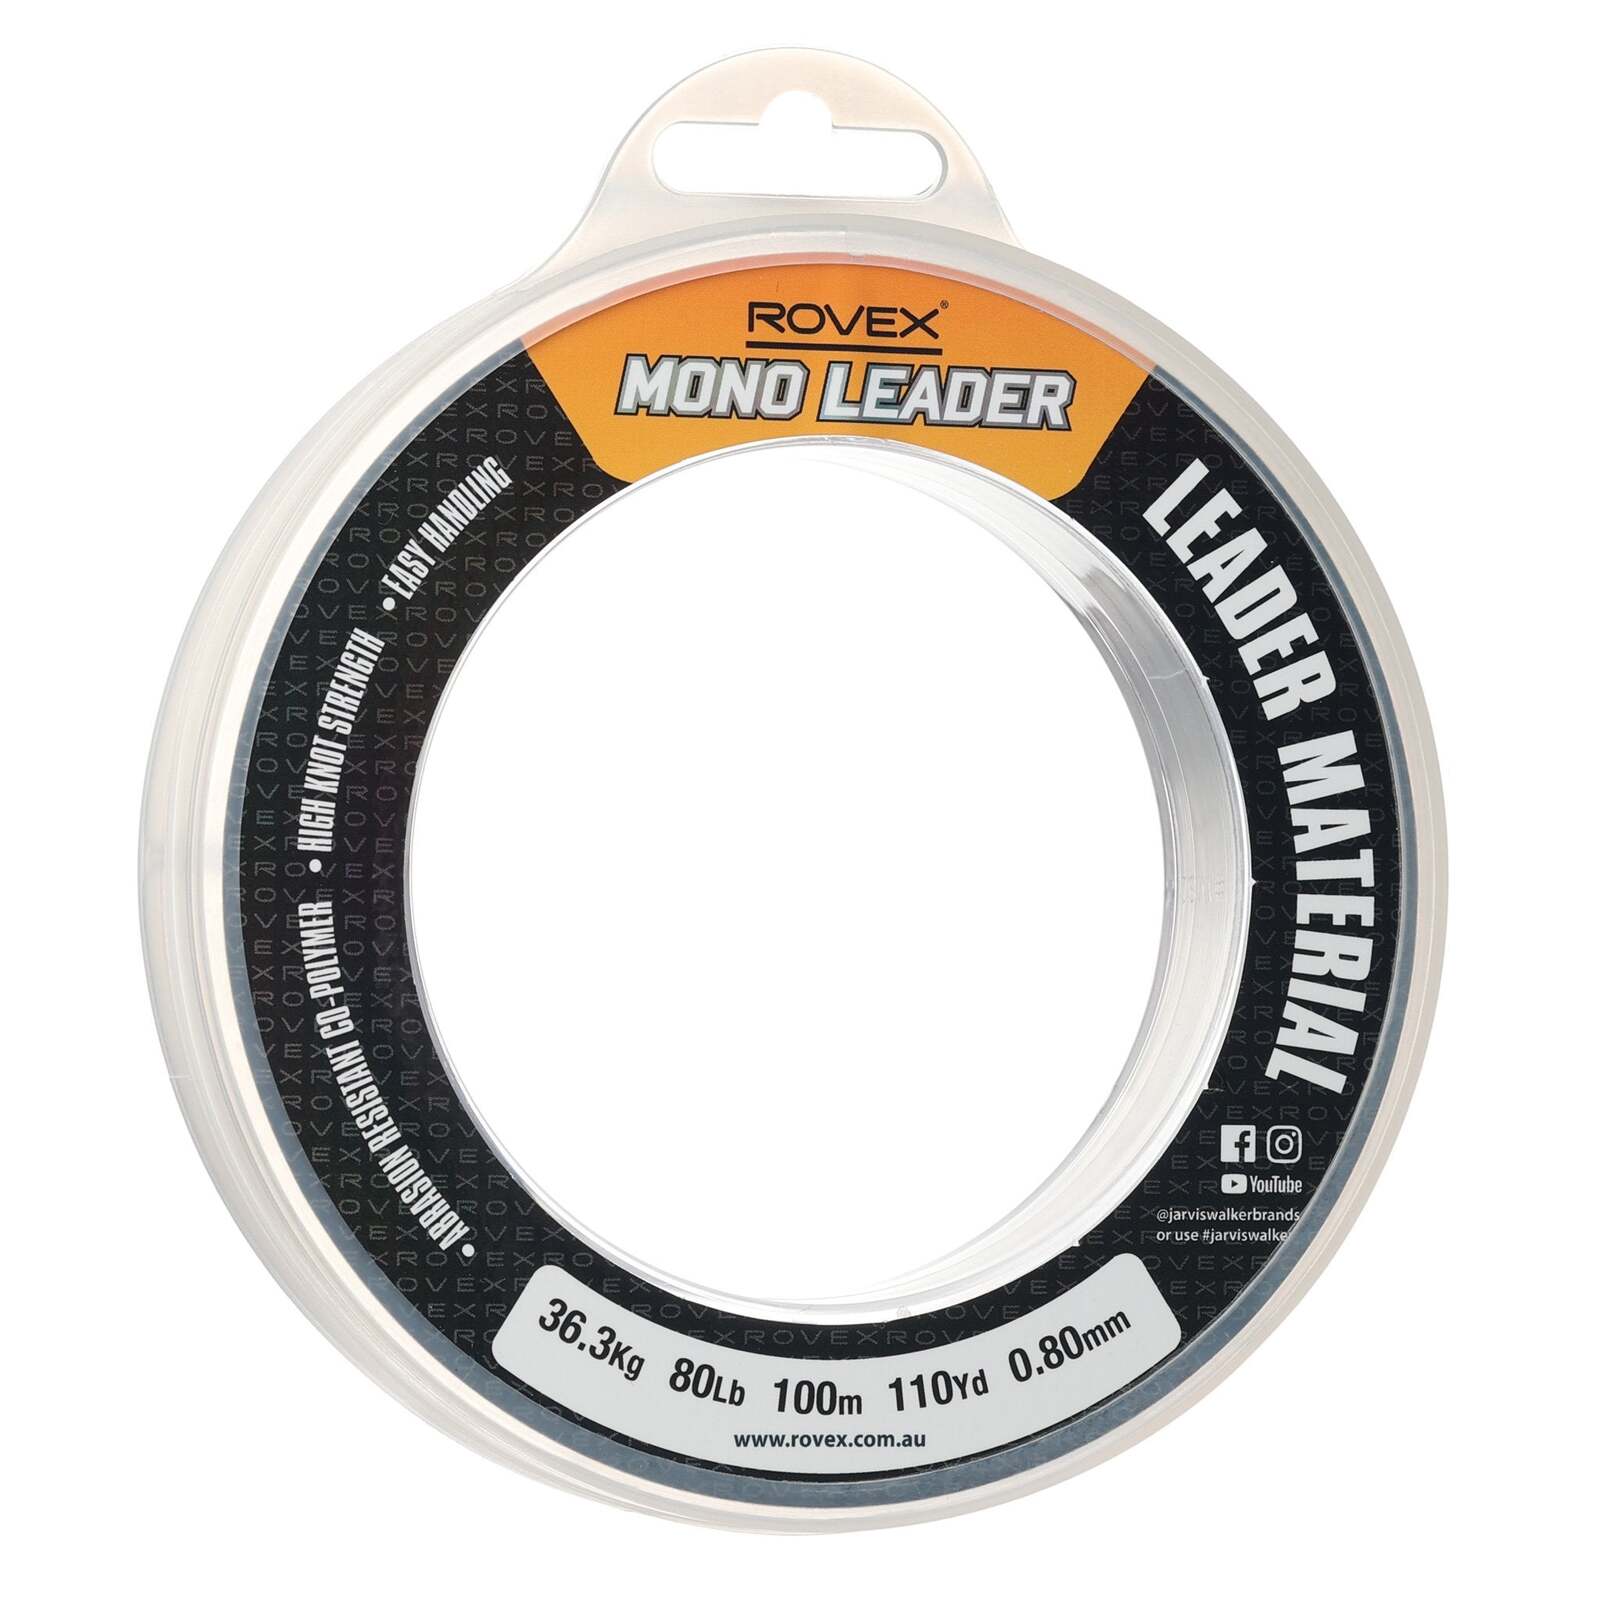 1 x 100m Spool of Rovex Monofilament Fishing Leader - Clear Mono Leader Line